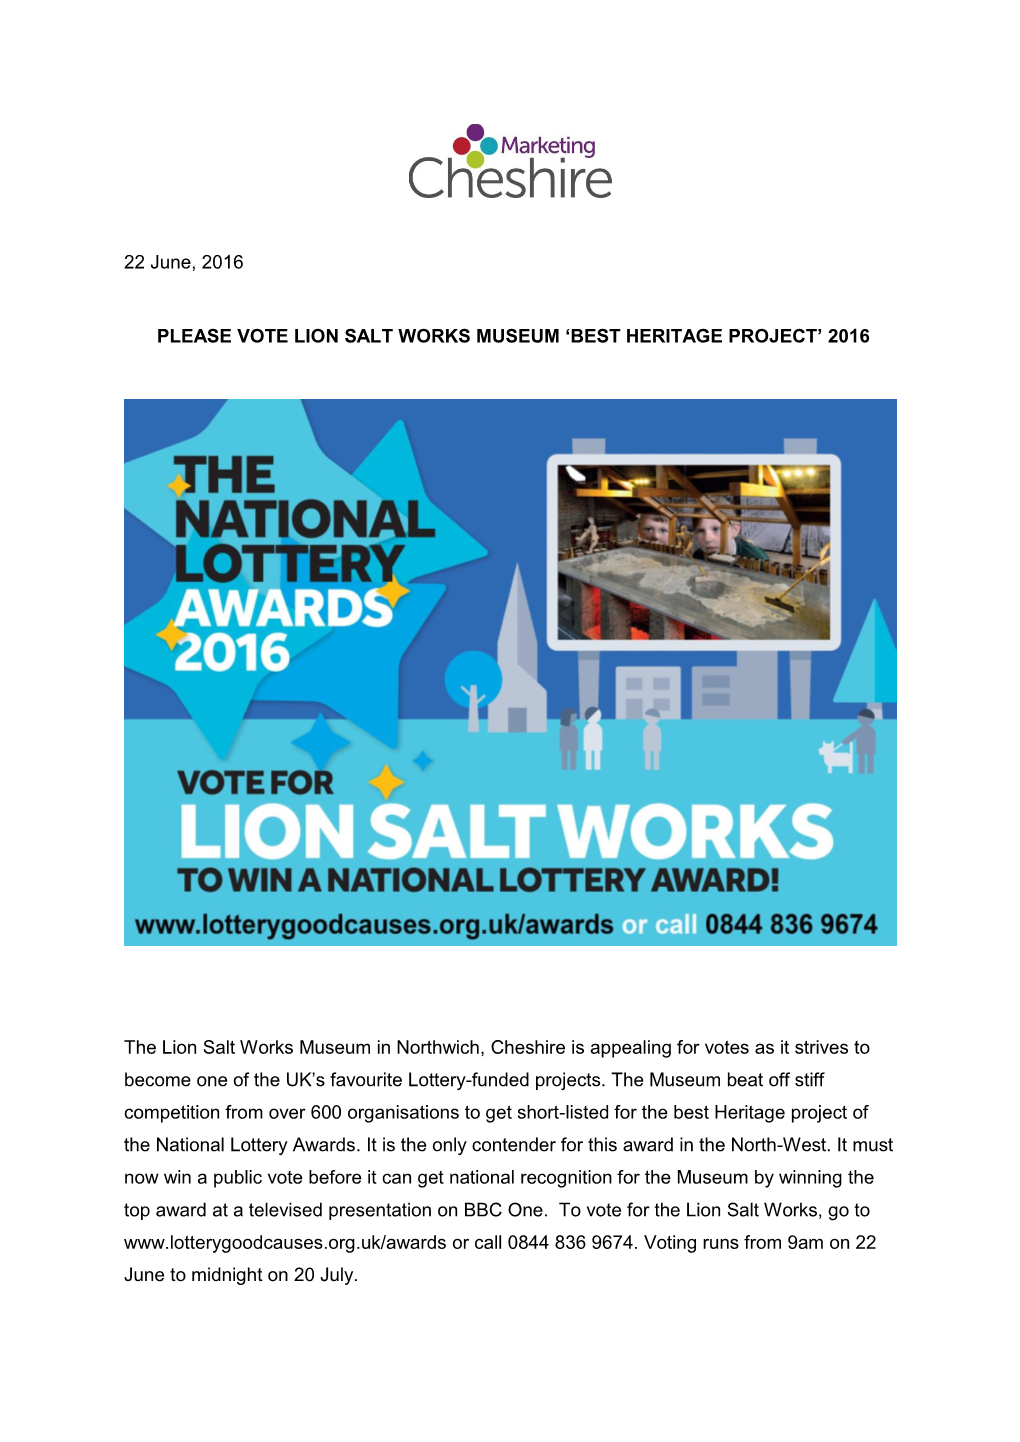 2016 the Lion Salt Works Museum in Northwich, Chesh